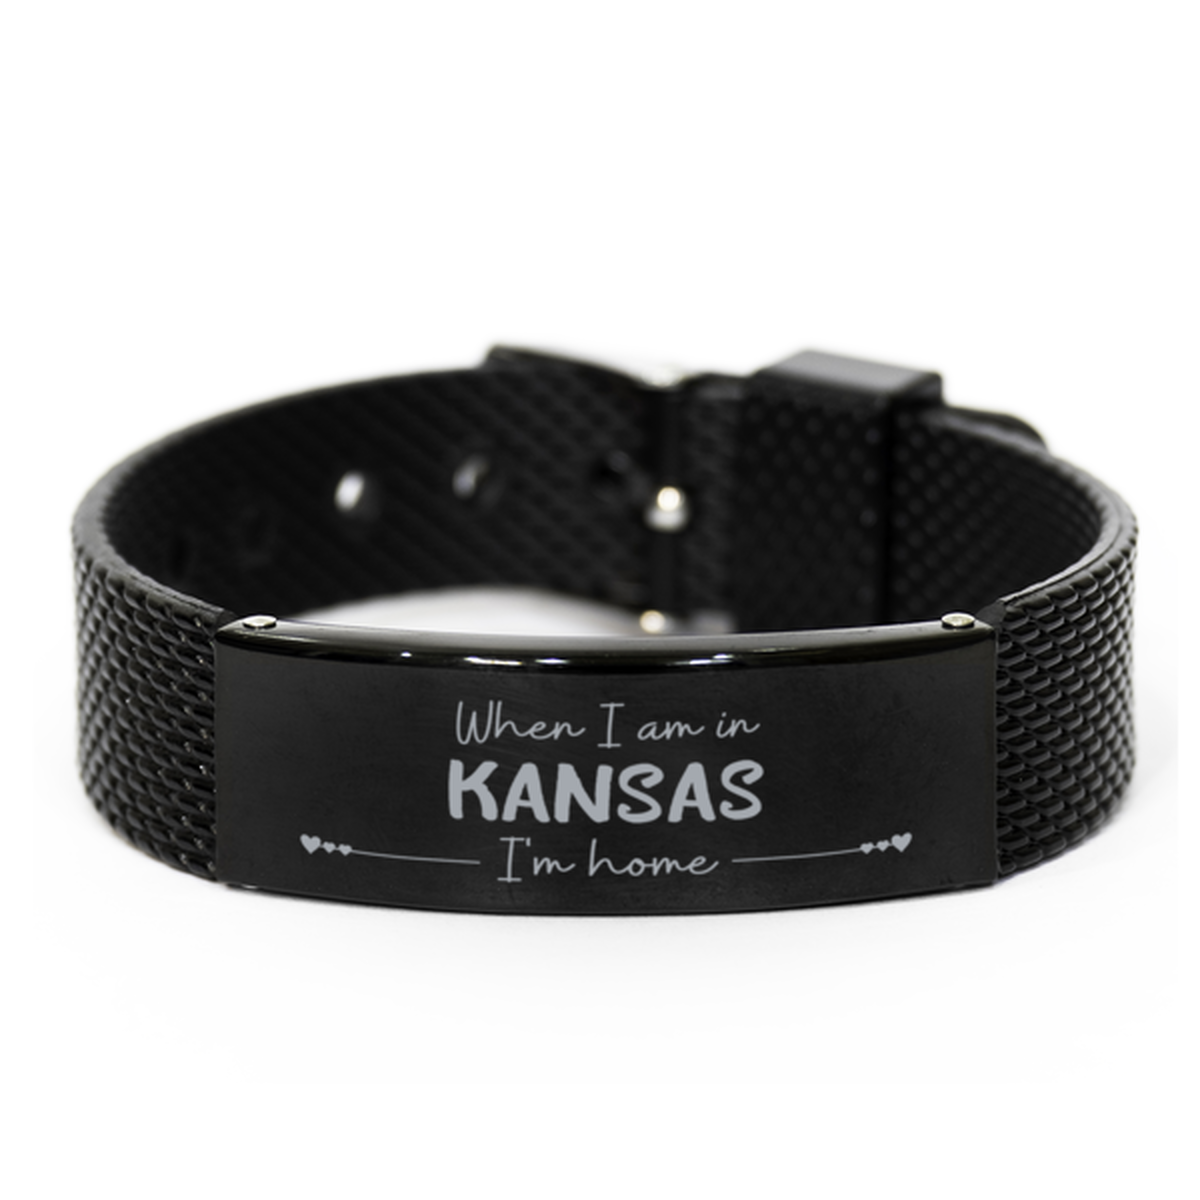 When I am in Kansas I'm home Black Shark Mesh Bracelet, Cheap Gifts For Kansas, State Kansas Birthday Gifts for Friends Coworker